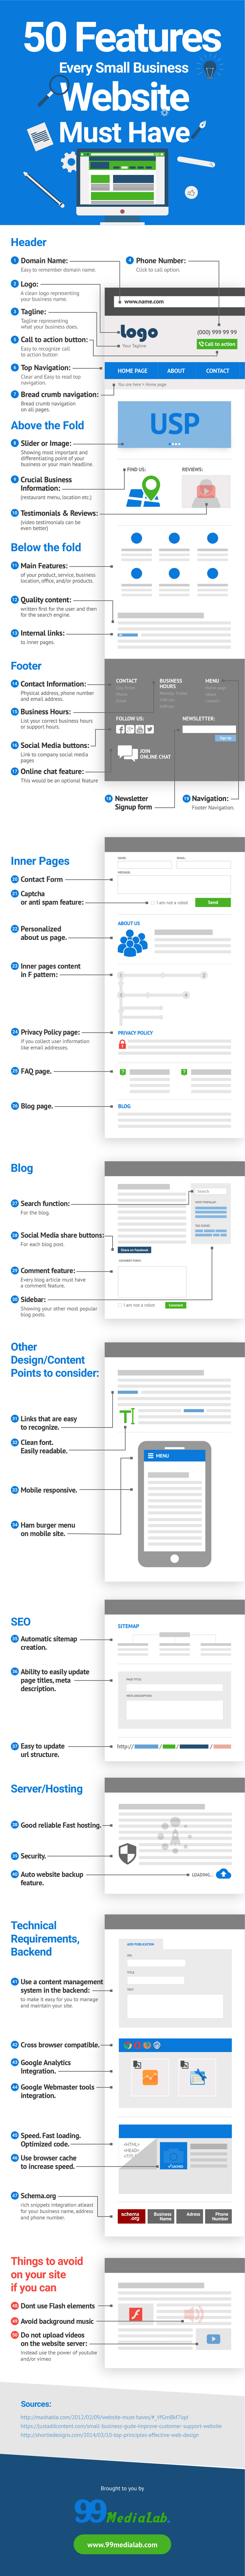 Infographic - essential website design elements